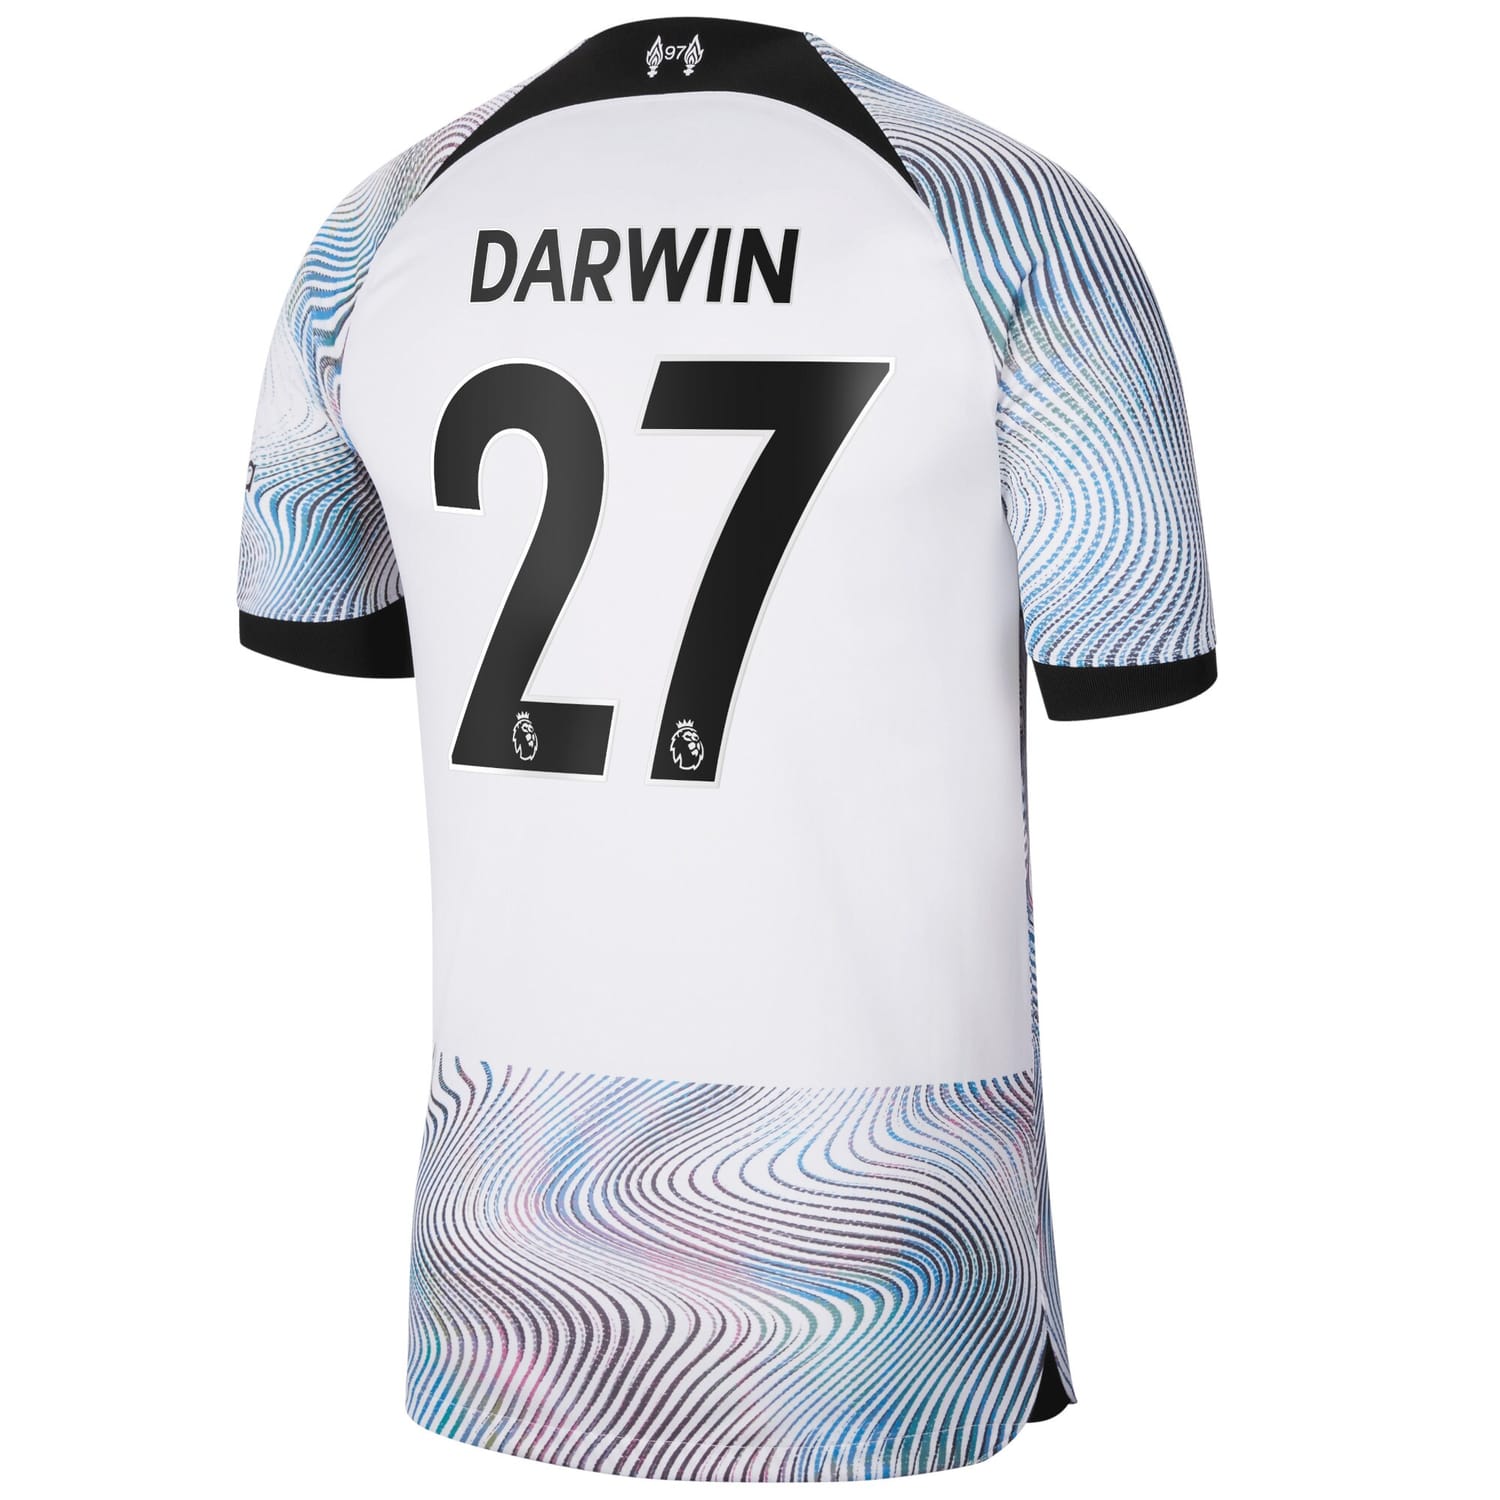 Premier League Liverpool Away Jersey Shirt 2022-23 player Darwin Núñez 27 printing for Men